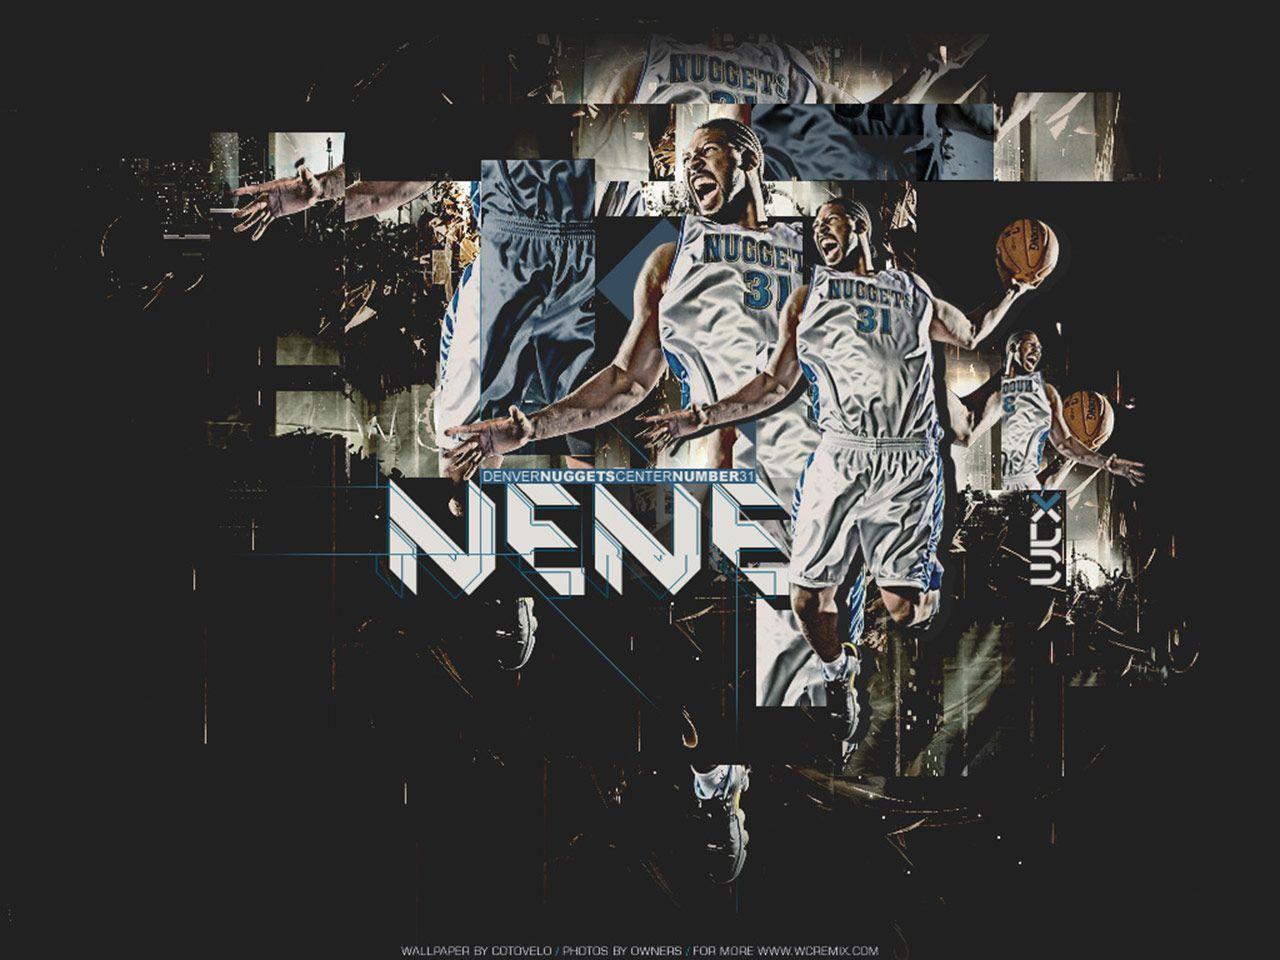 Nene Hilario Denver Nuggets Wallpaper. Basketball Wallpaper at